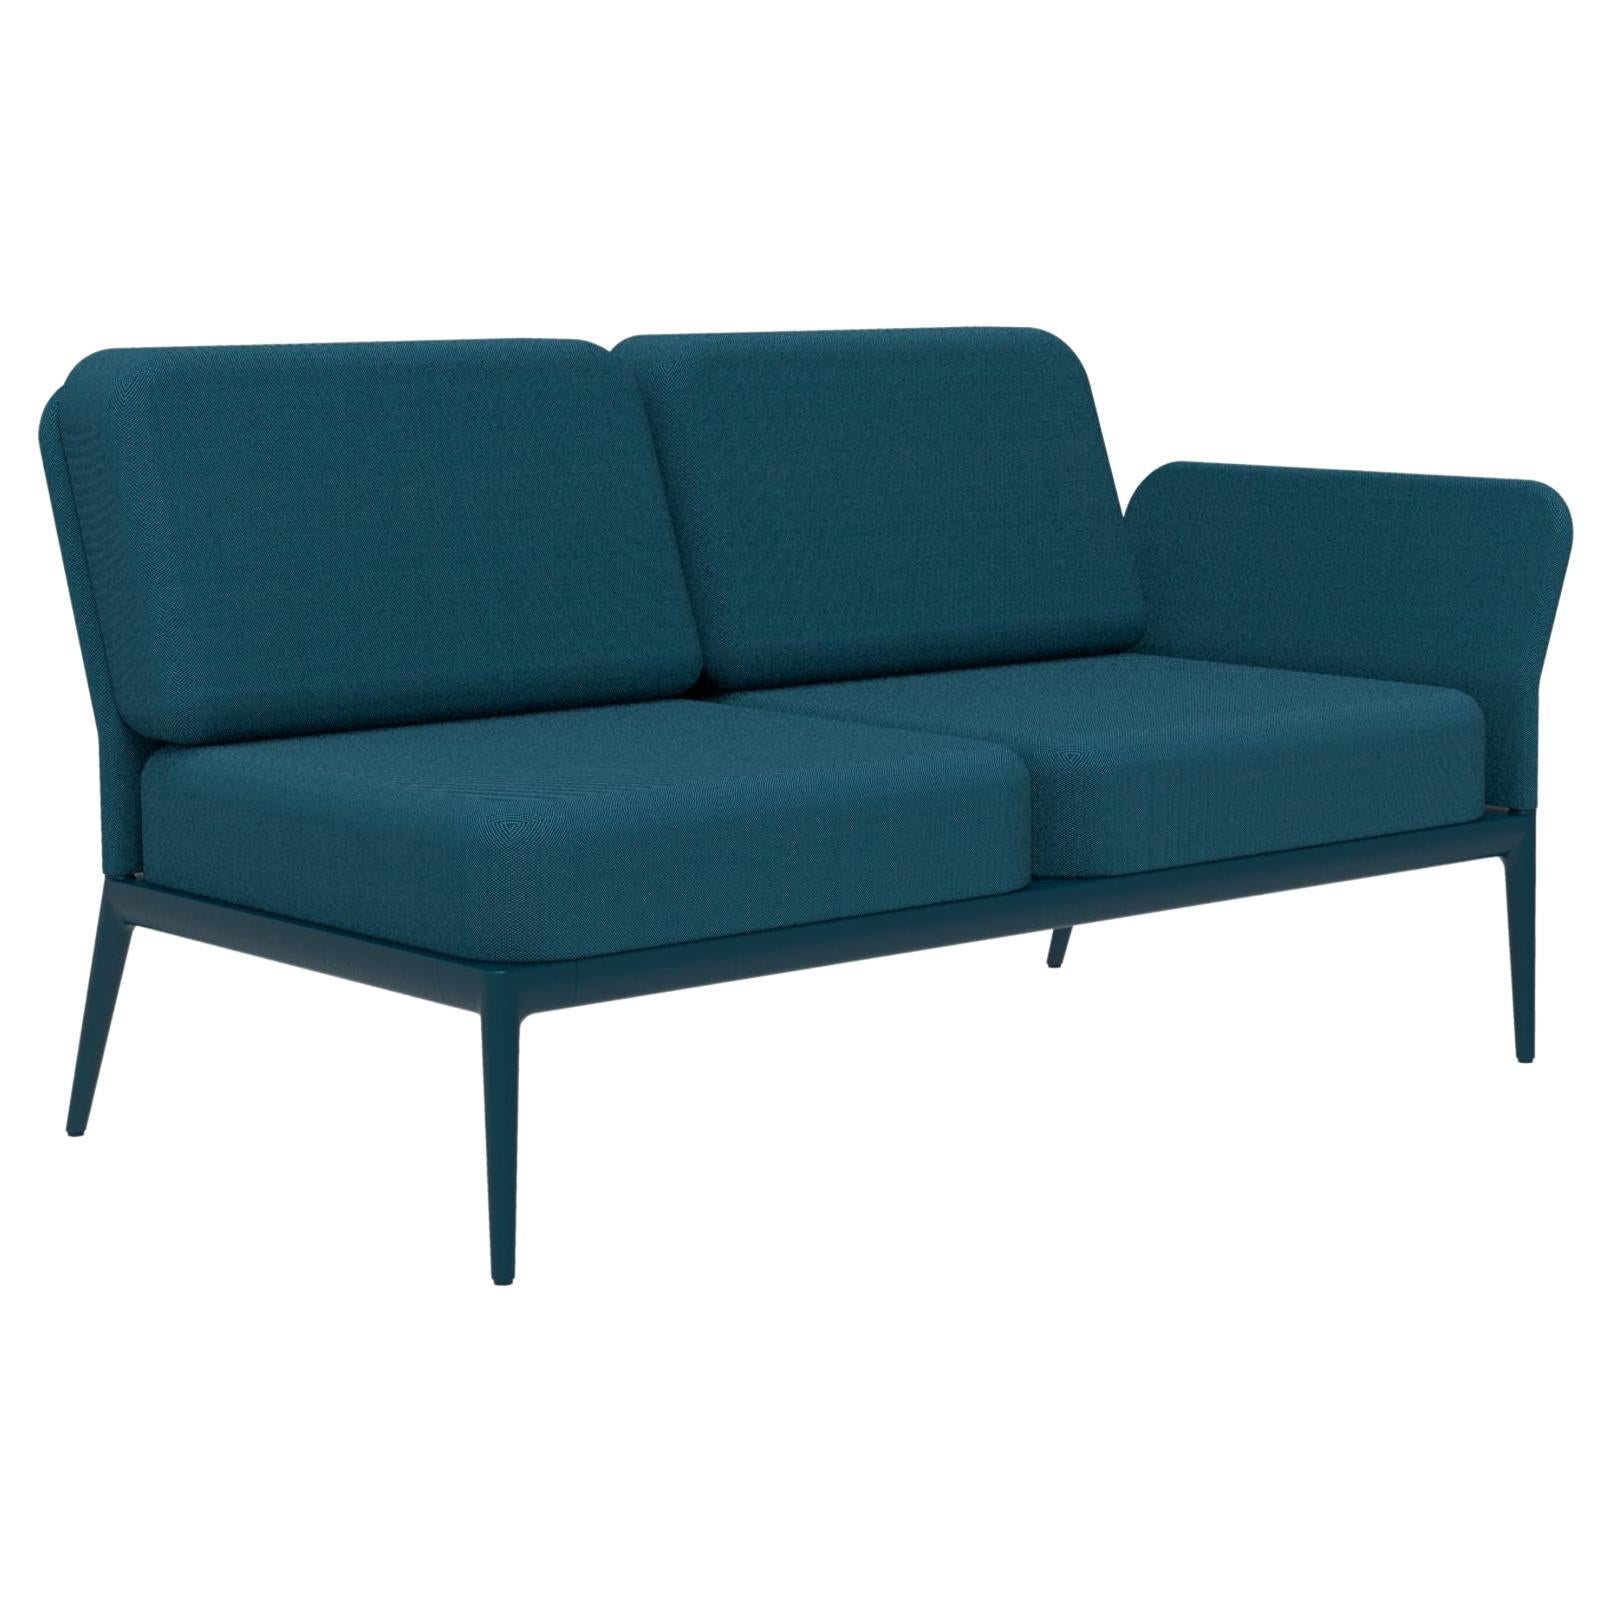 Modulares Marineblaues doppelseitiges Sofa mit Deckel von MOWEE